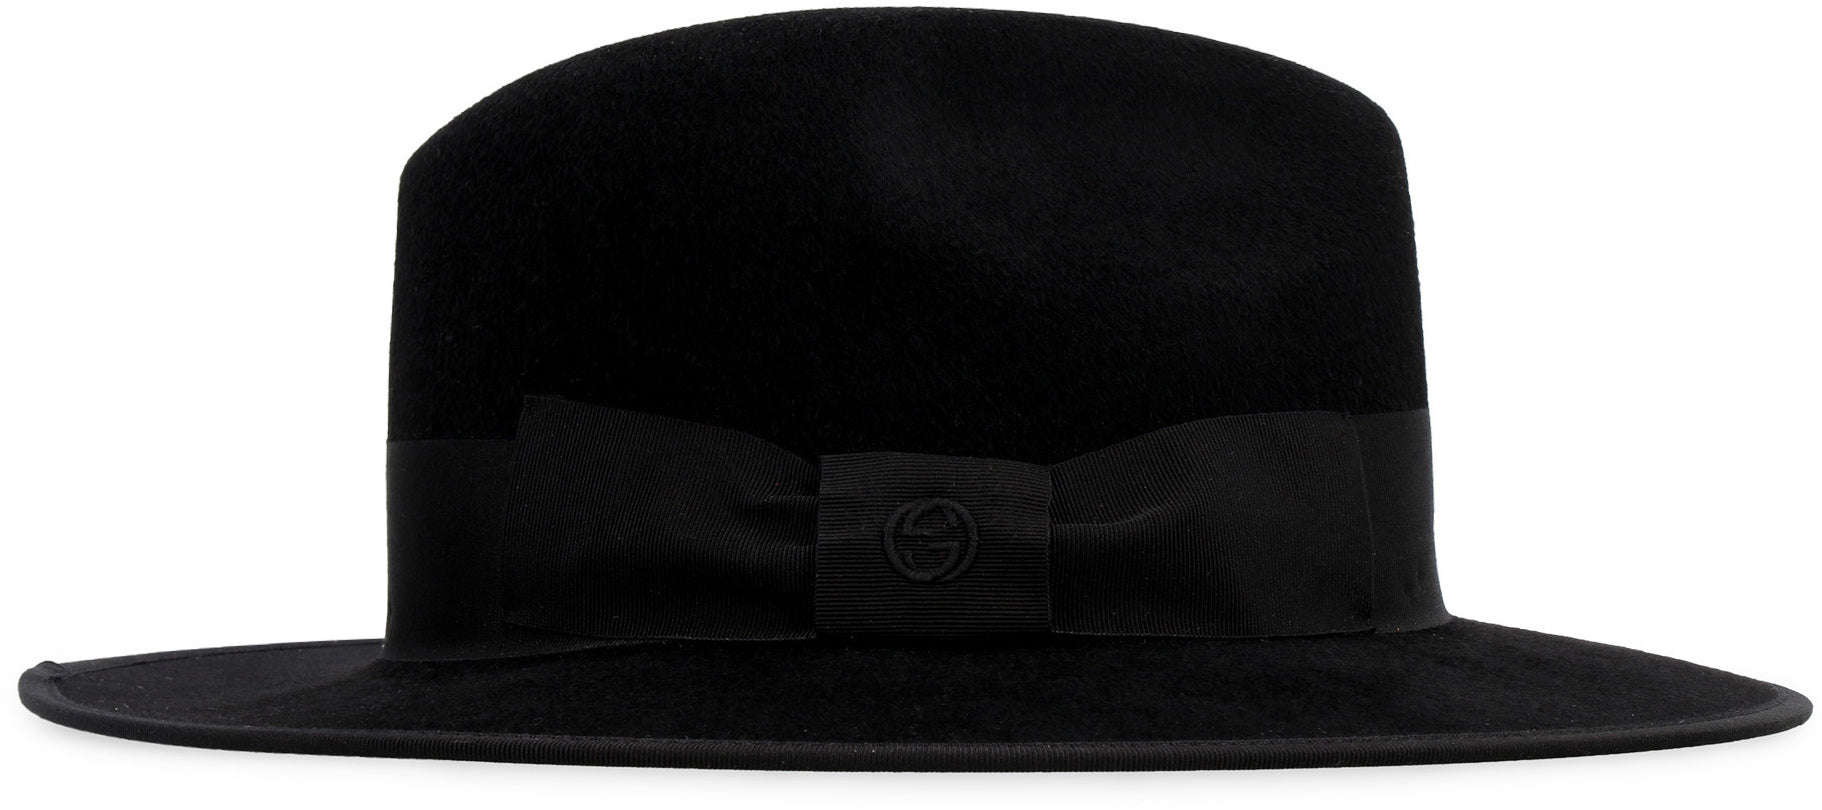 Gucci Black Felt Hat For Women